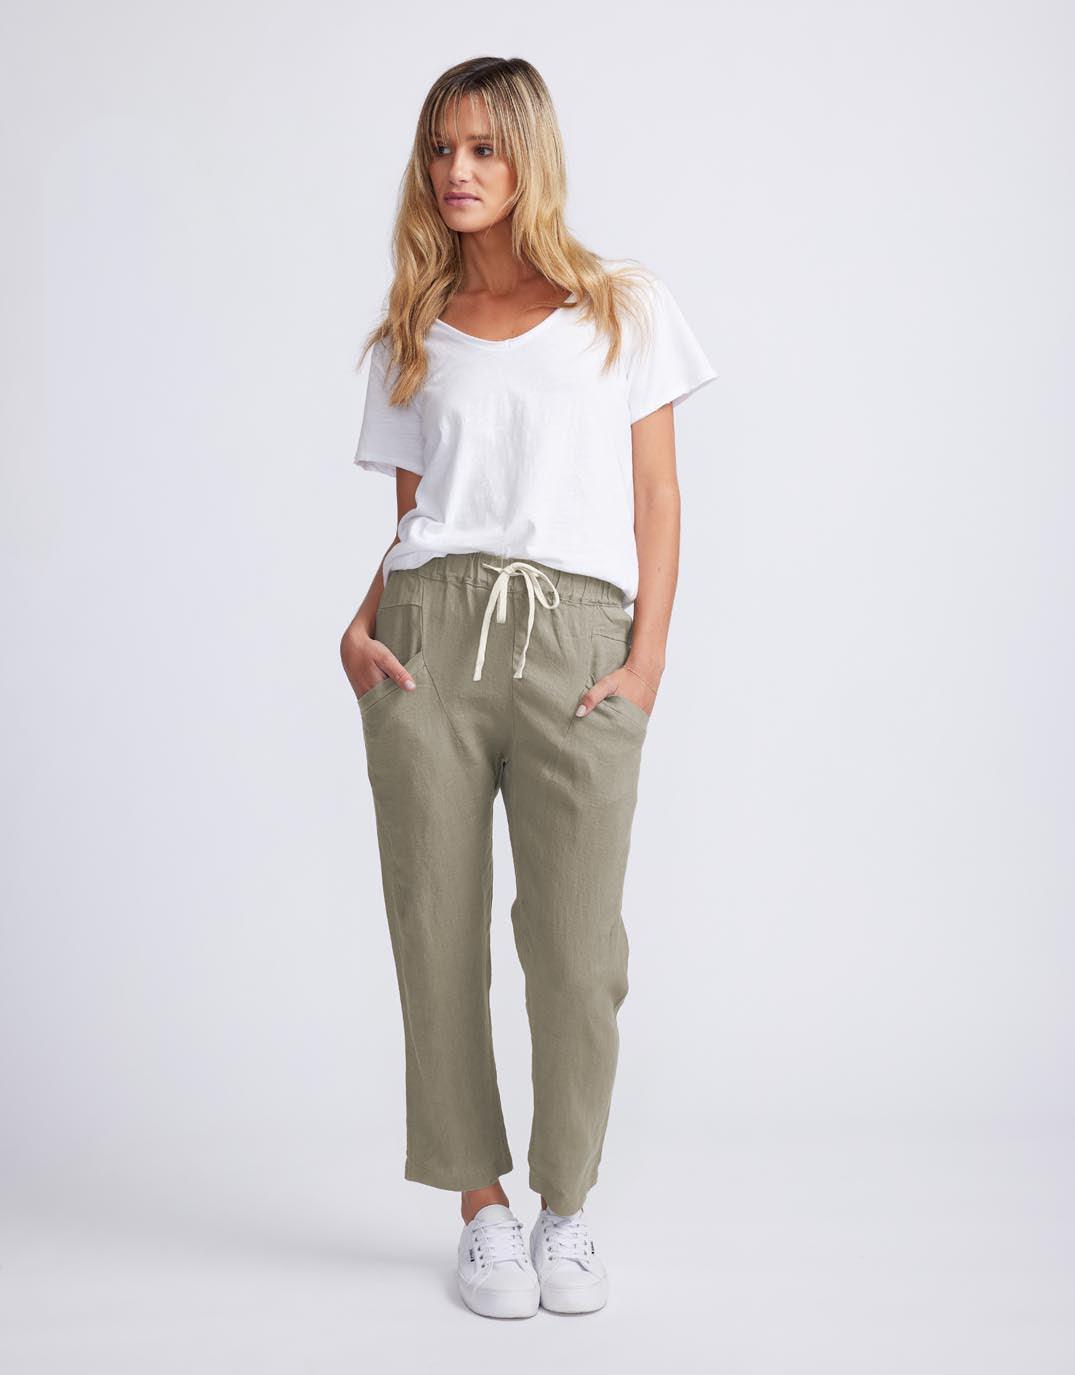 Little Lies - Luxe Linen Pants - Khaki - White & Co Living Pants